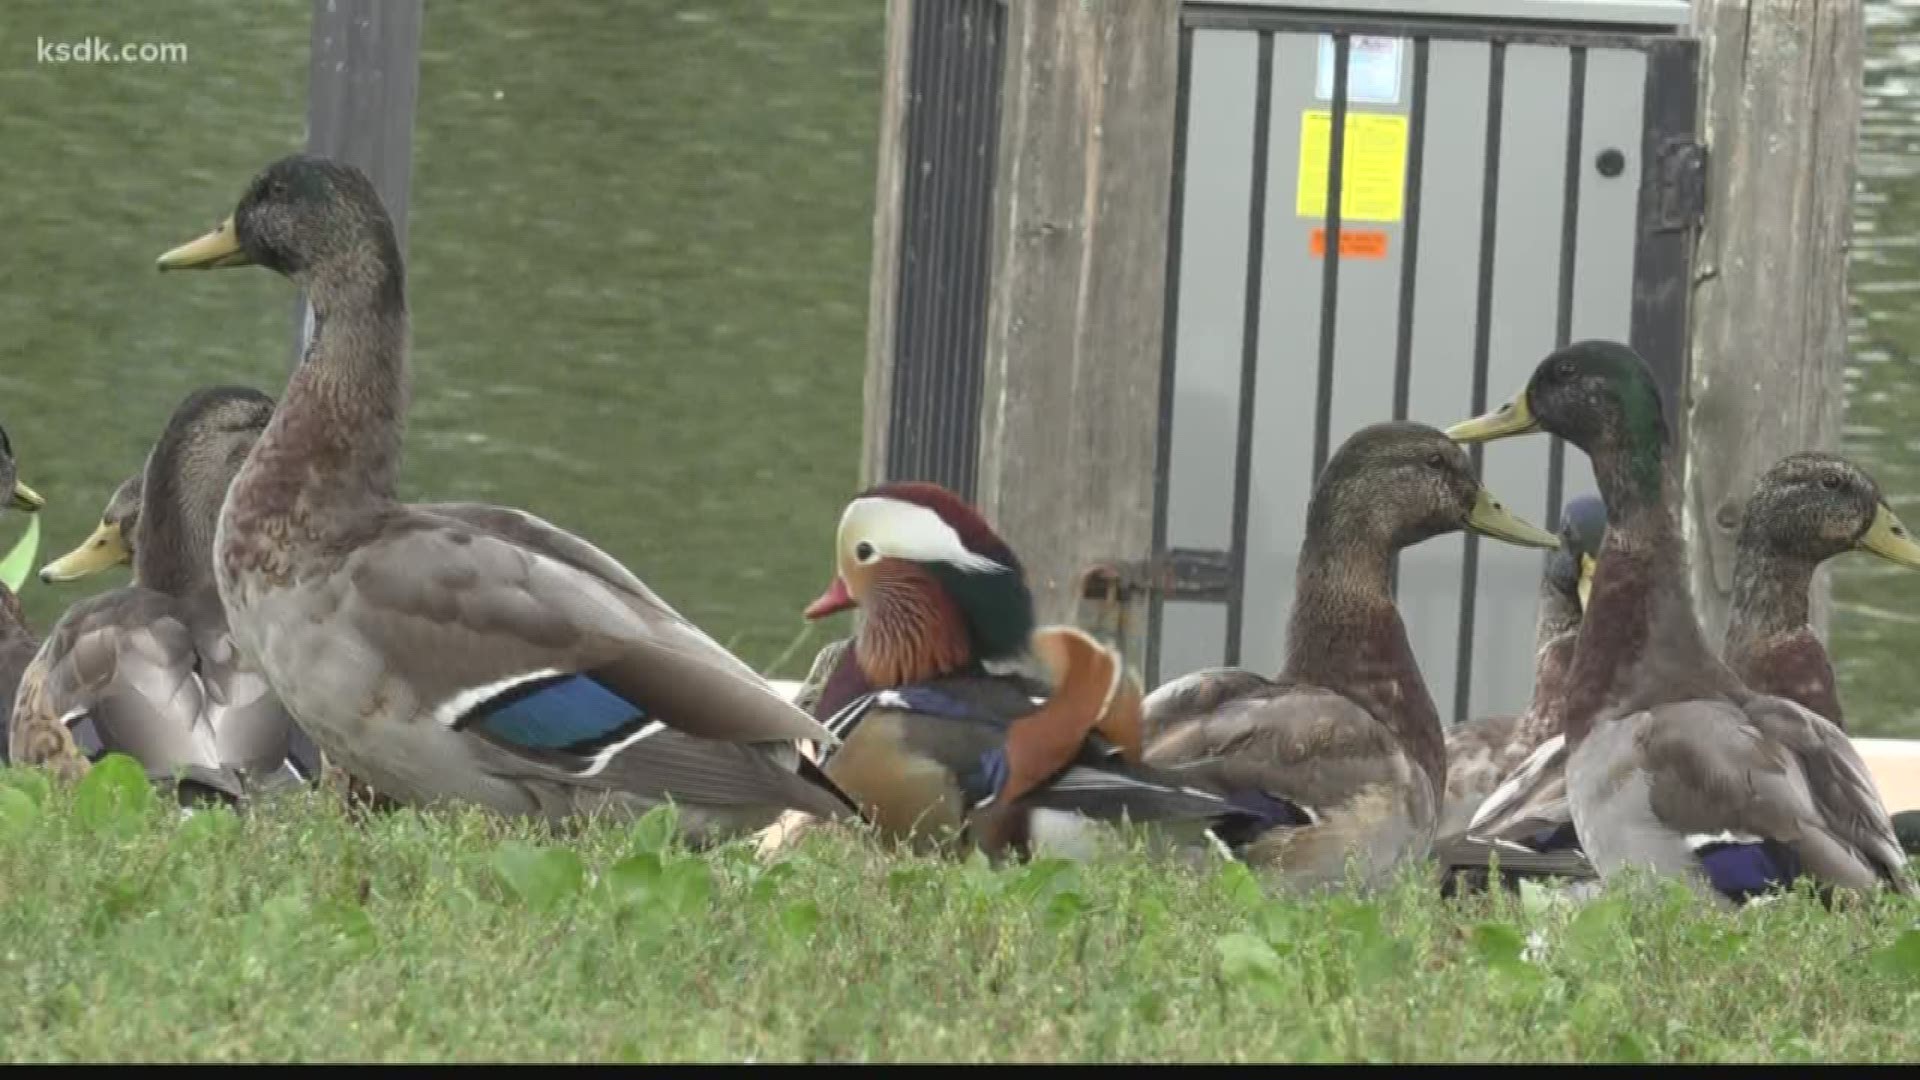 The unique-looking duck is bringing birdwatchers to Florissant.